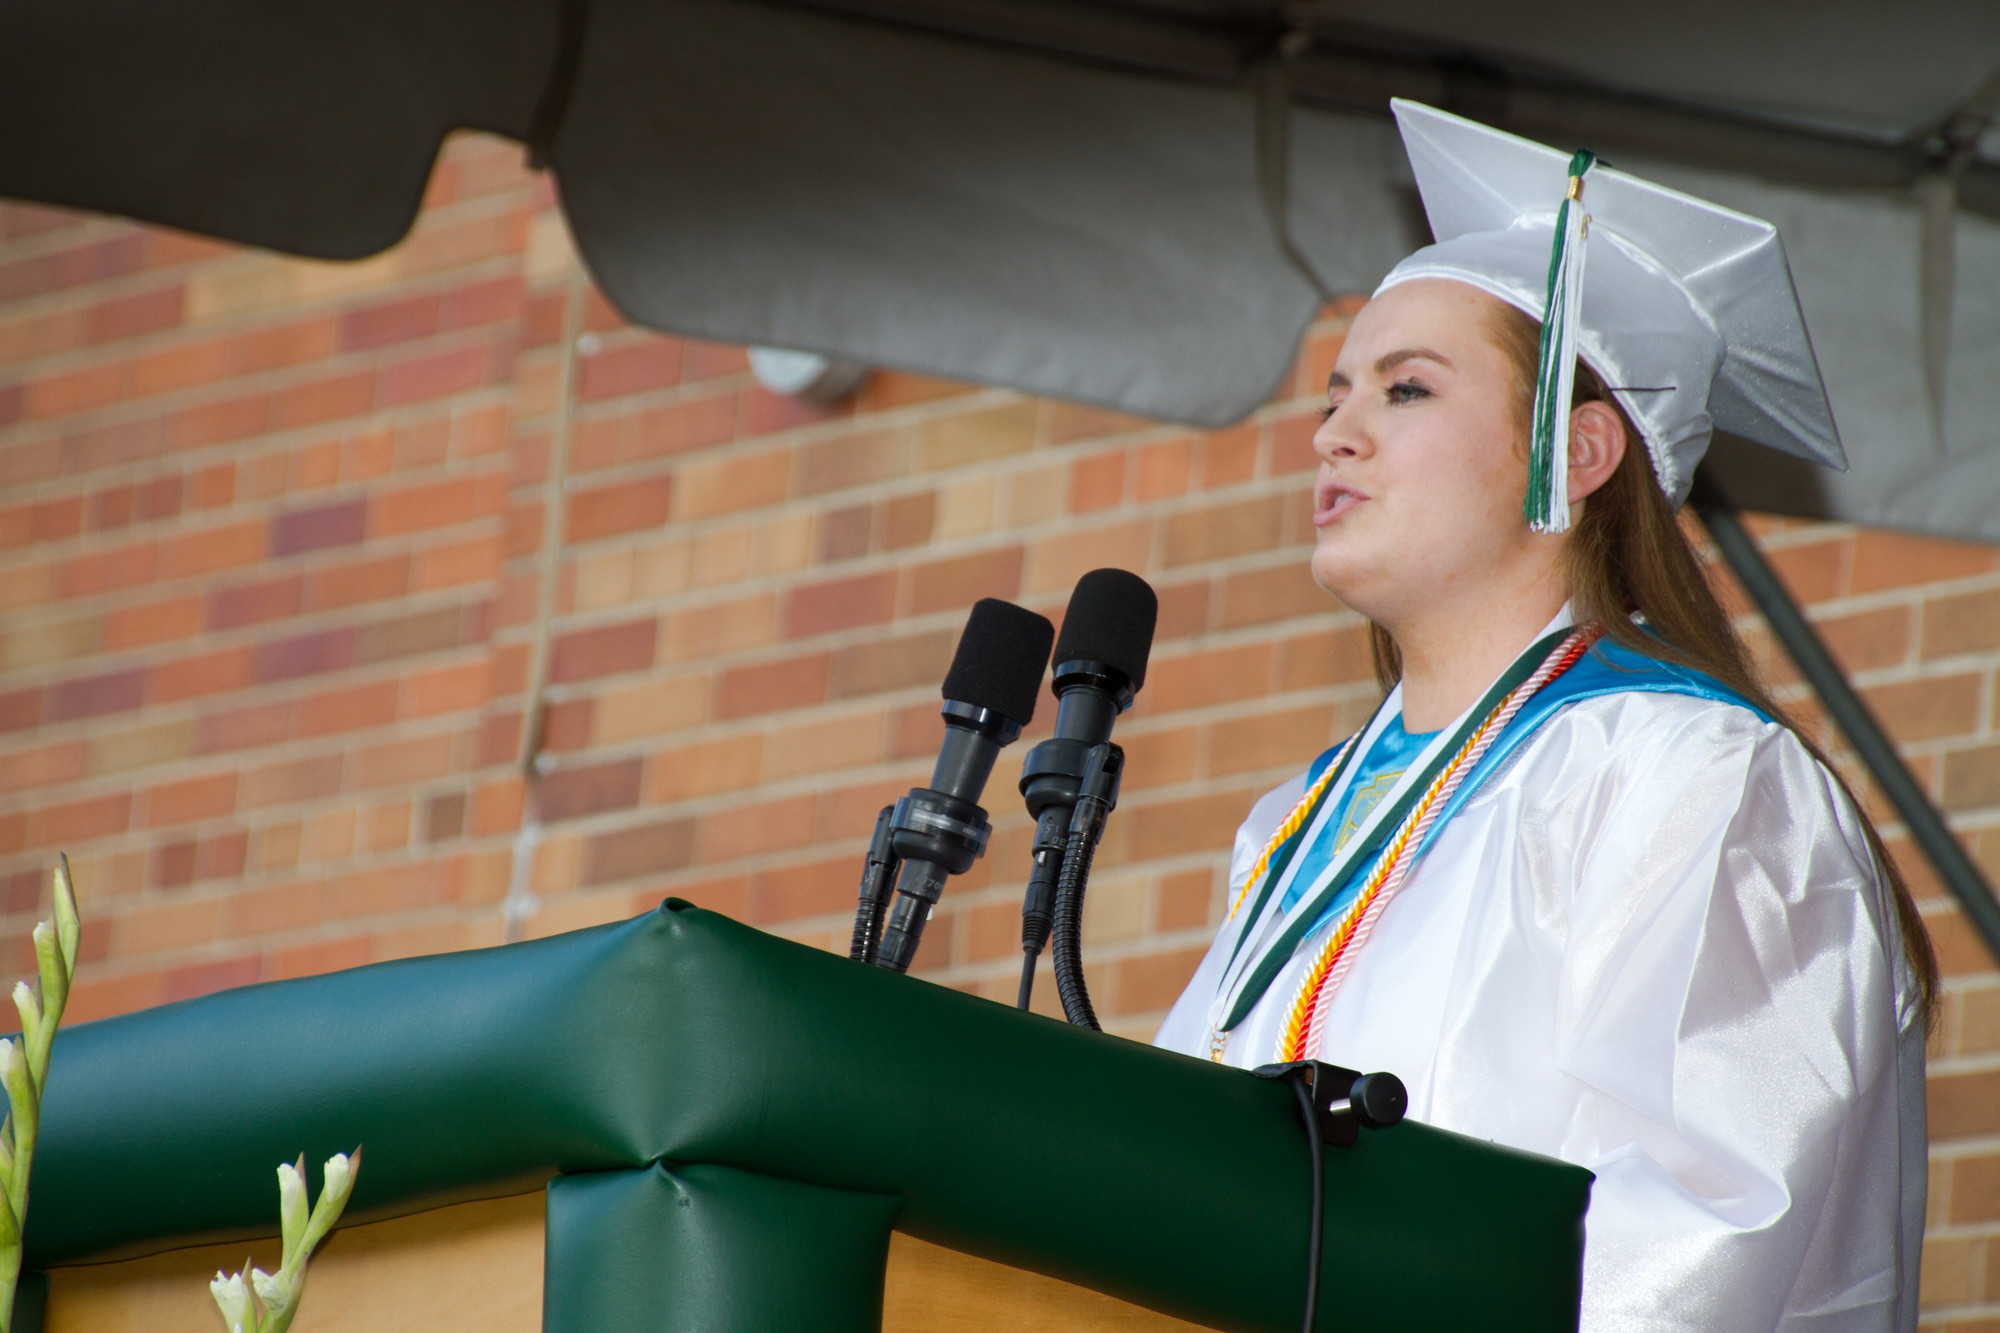 Valedictorian Jeanette Freeman addressed her classmates at North High’s graduation on June 26.